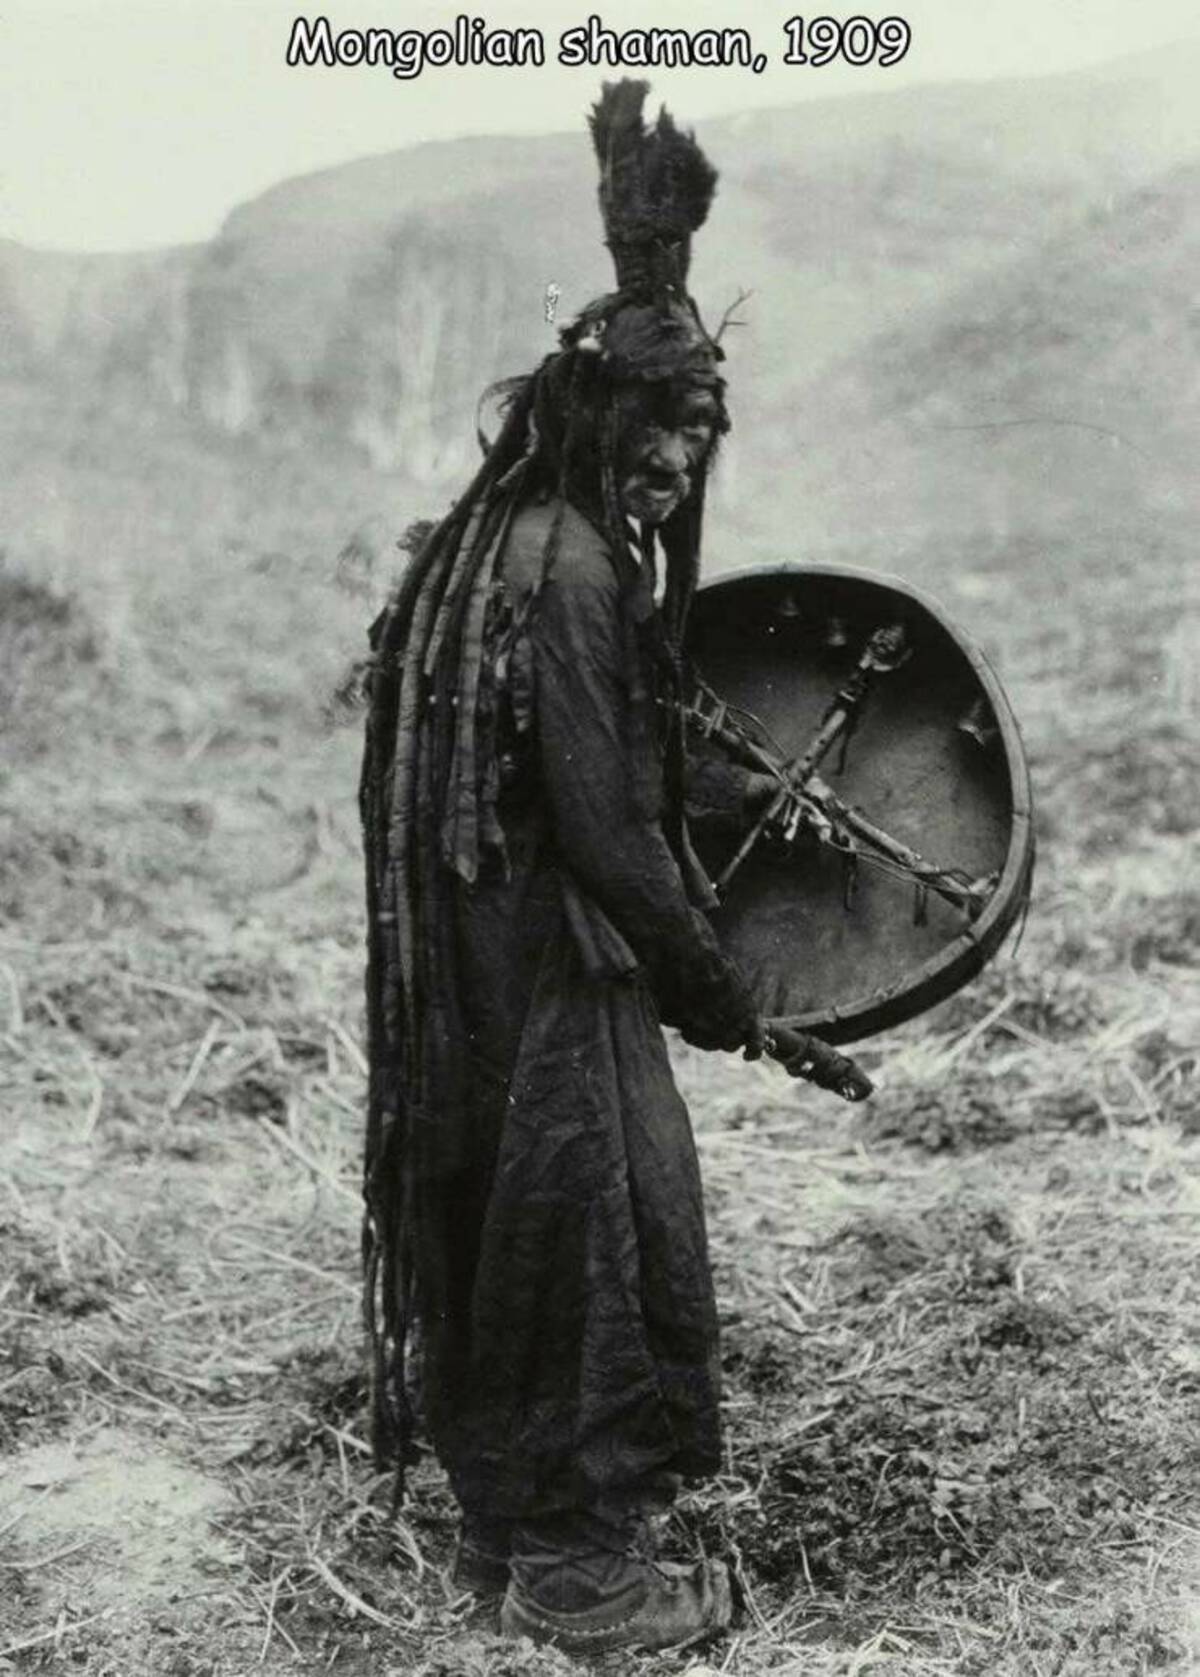 mongolia shaman tattoo - Mongolian shaman, 1909